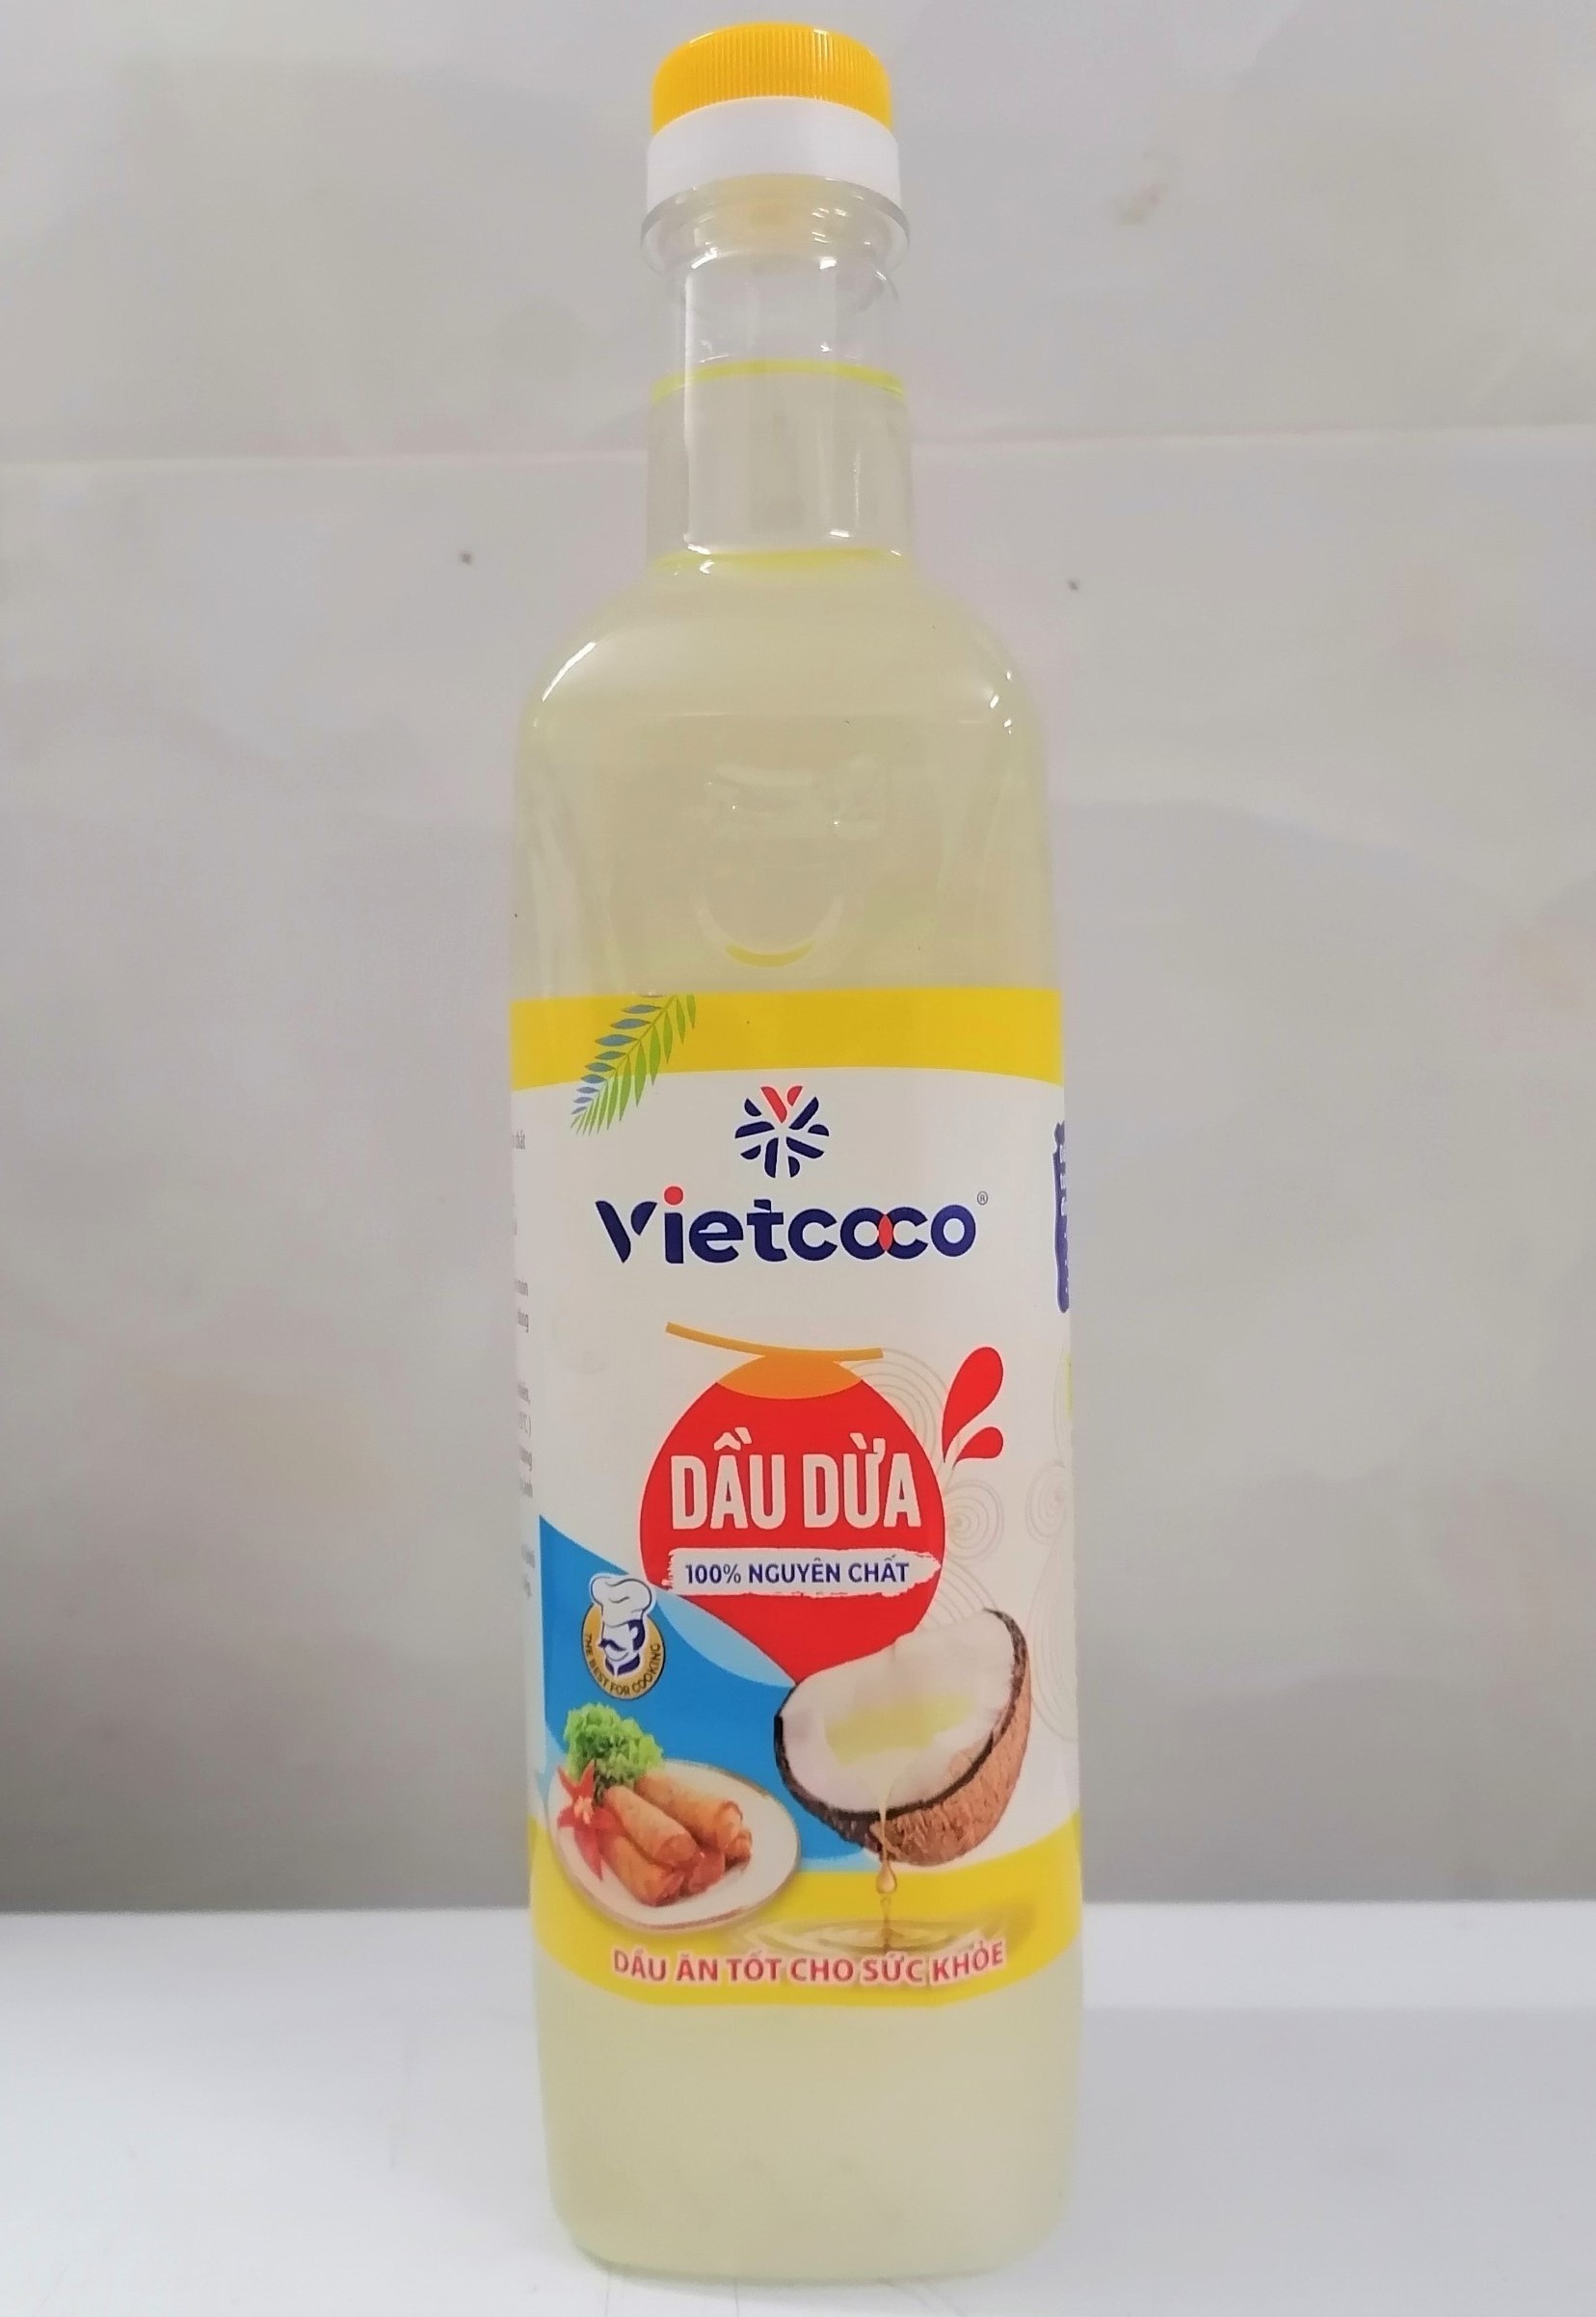 Chai 1 Liter DẦU DỪA 100% NGUYÊN CHẤT VIETCOCO Coconut Oil HALAL